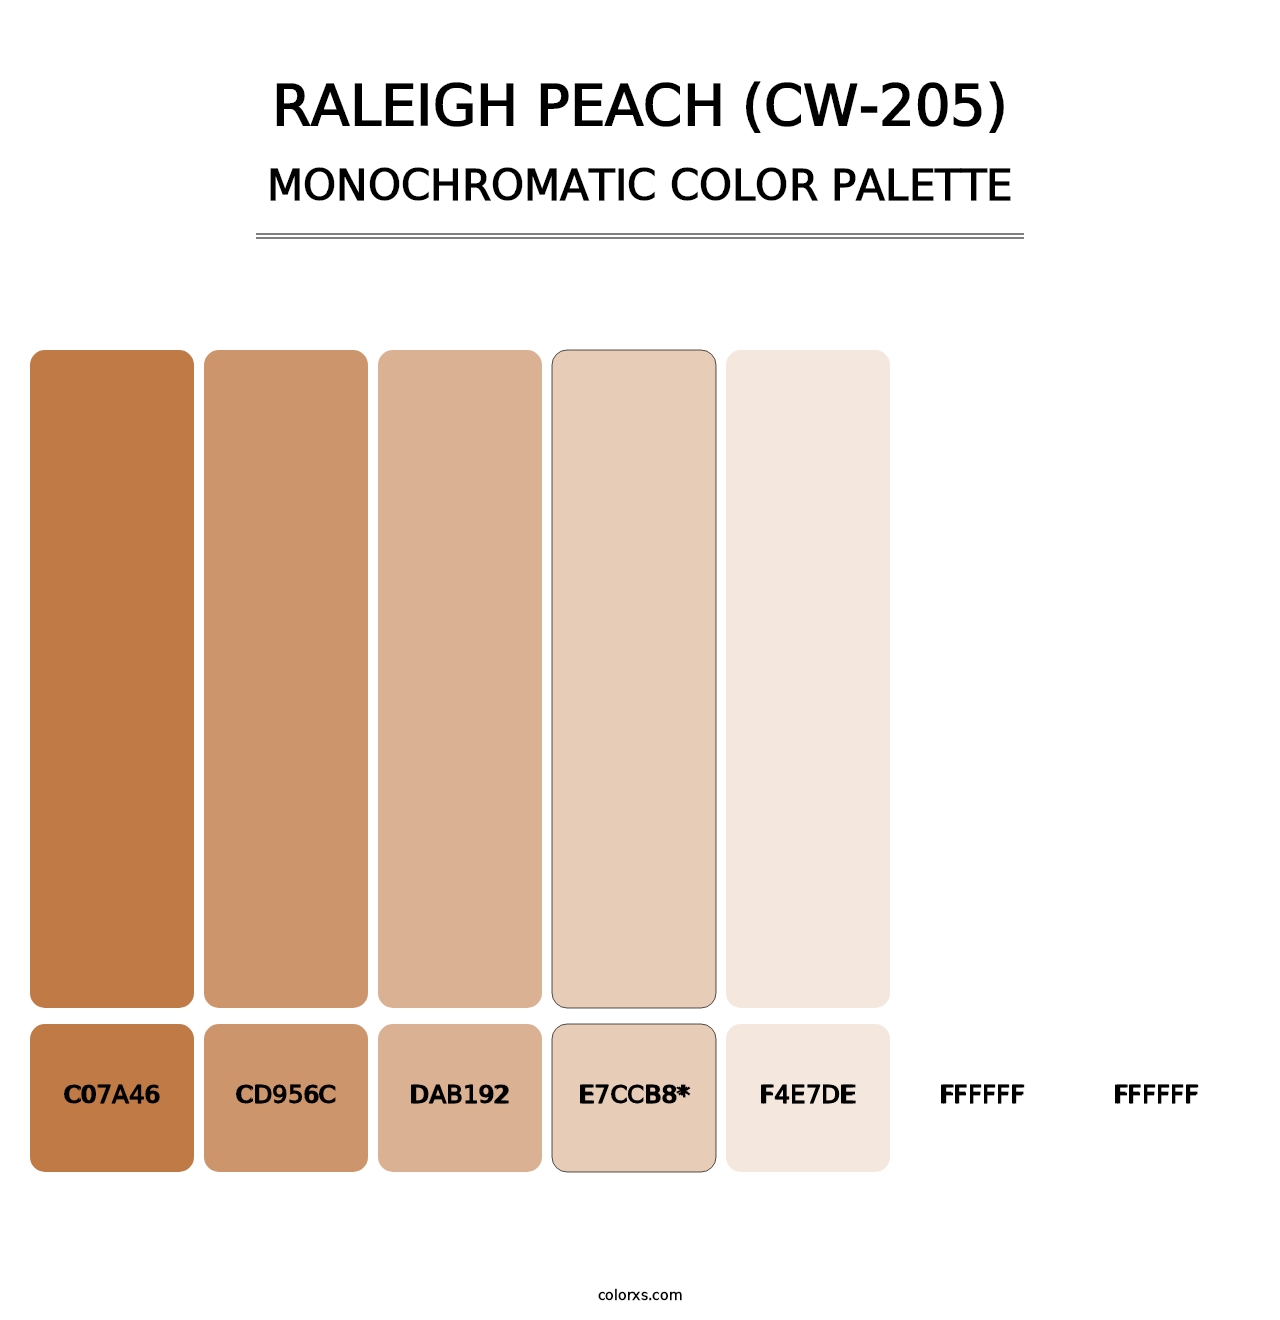 Raleigh Peach (CW-205) - Monochromatic Color Palette